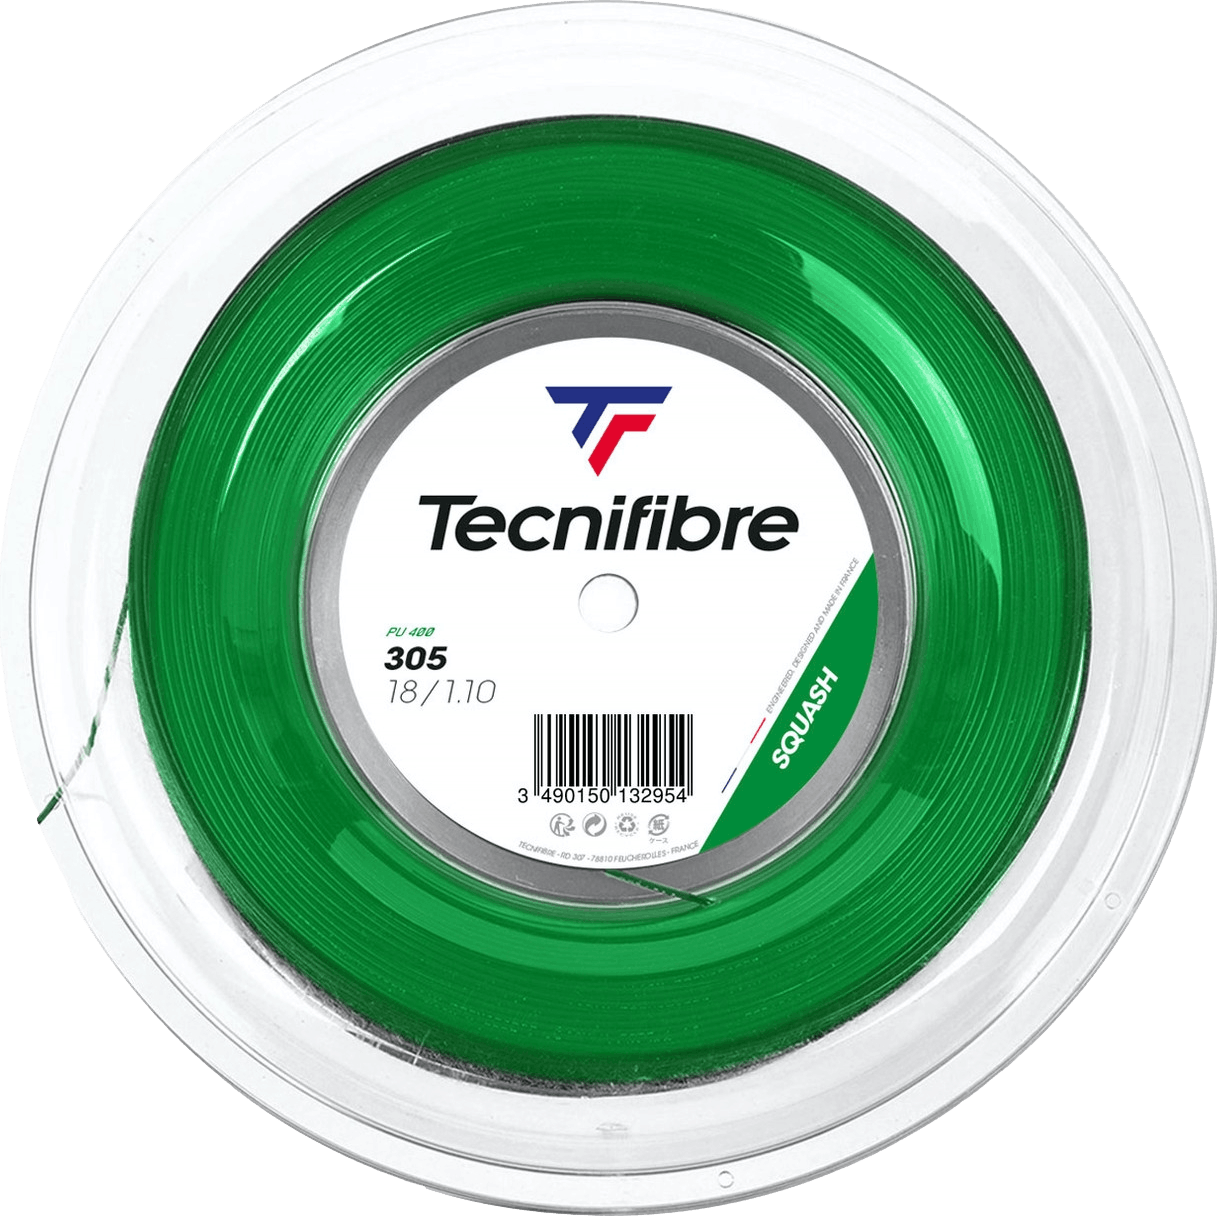 Technifibre 305 SPL Squash String Reel · 18g · Green